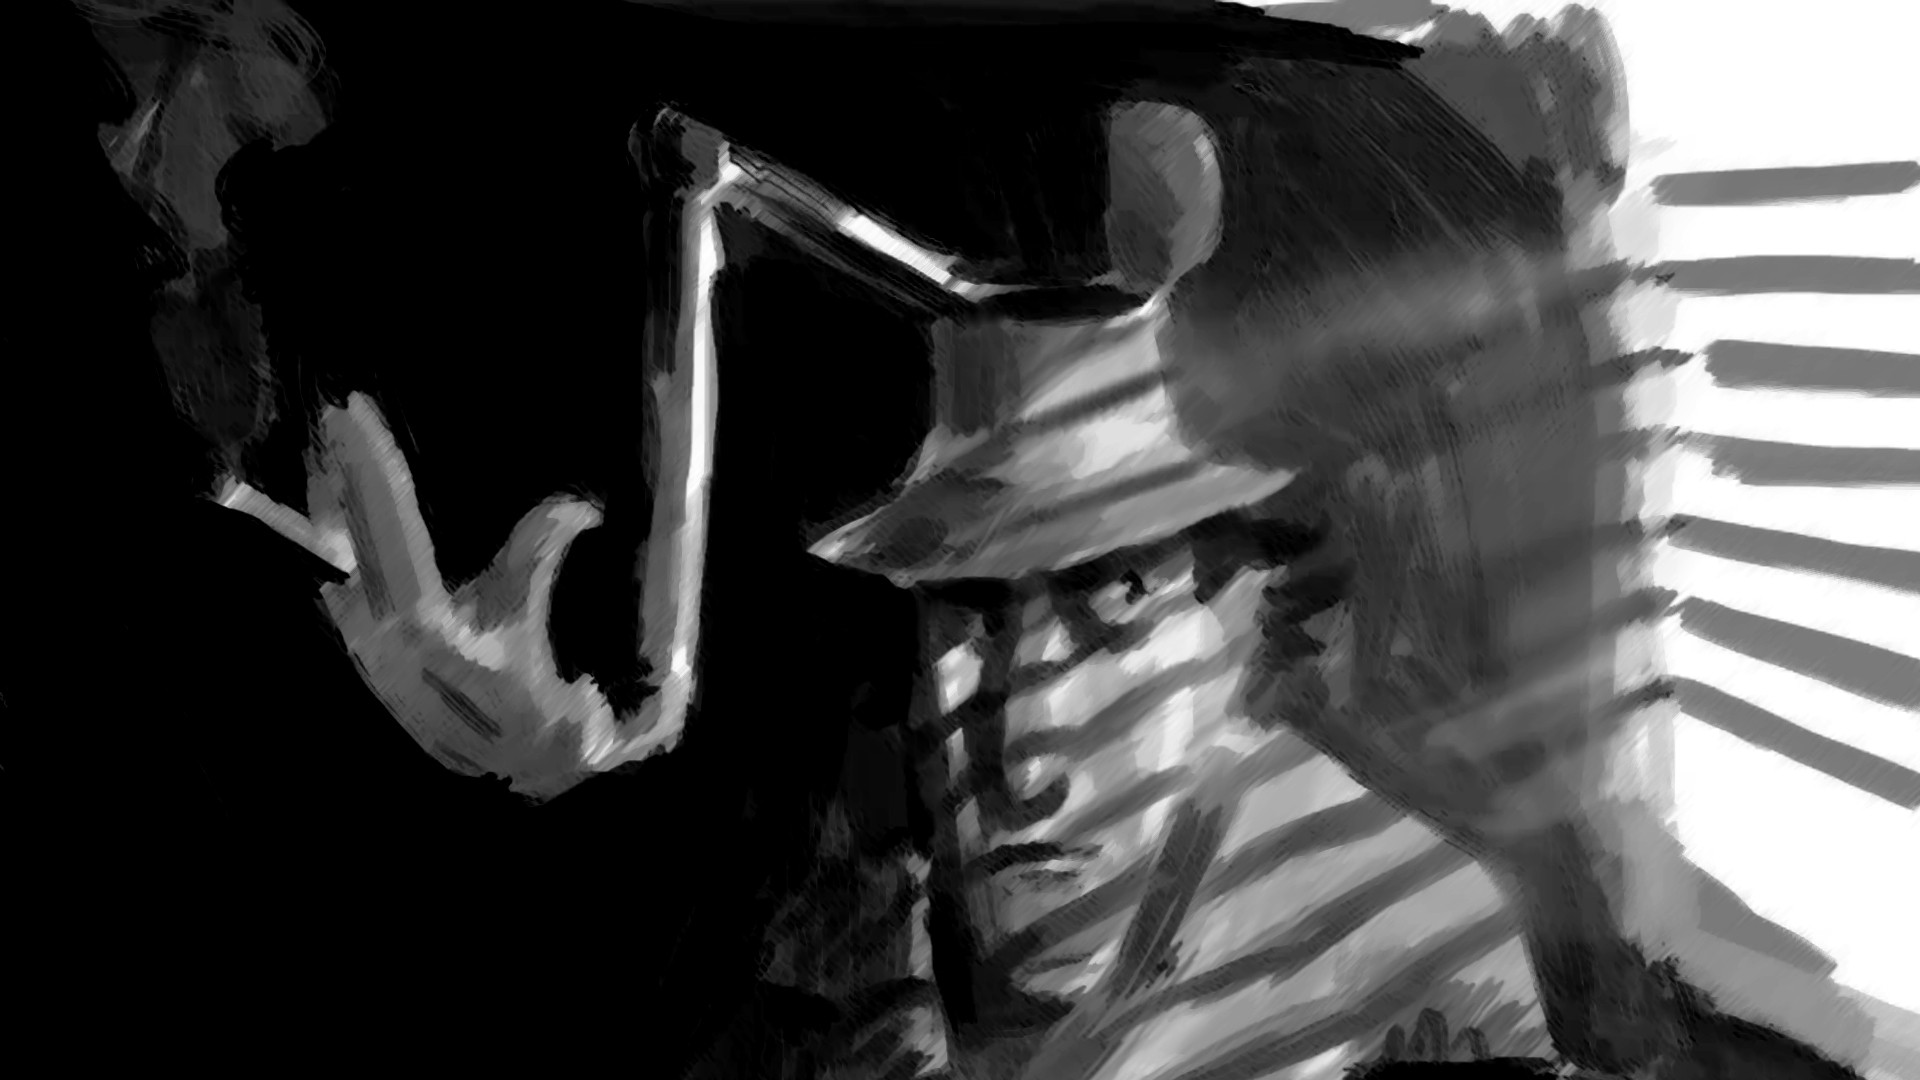 General 1920x1080 humor cigarettes shadow gray artwork Inspector Gadget smoking blinds monochrome black hat